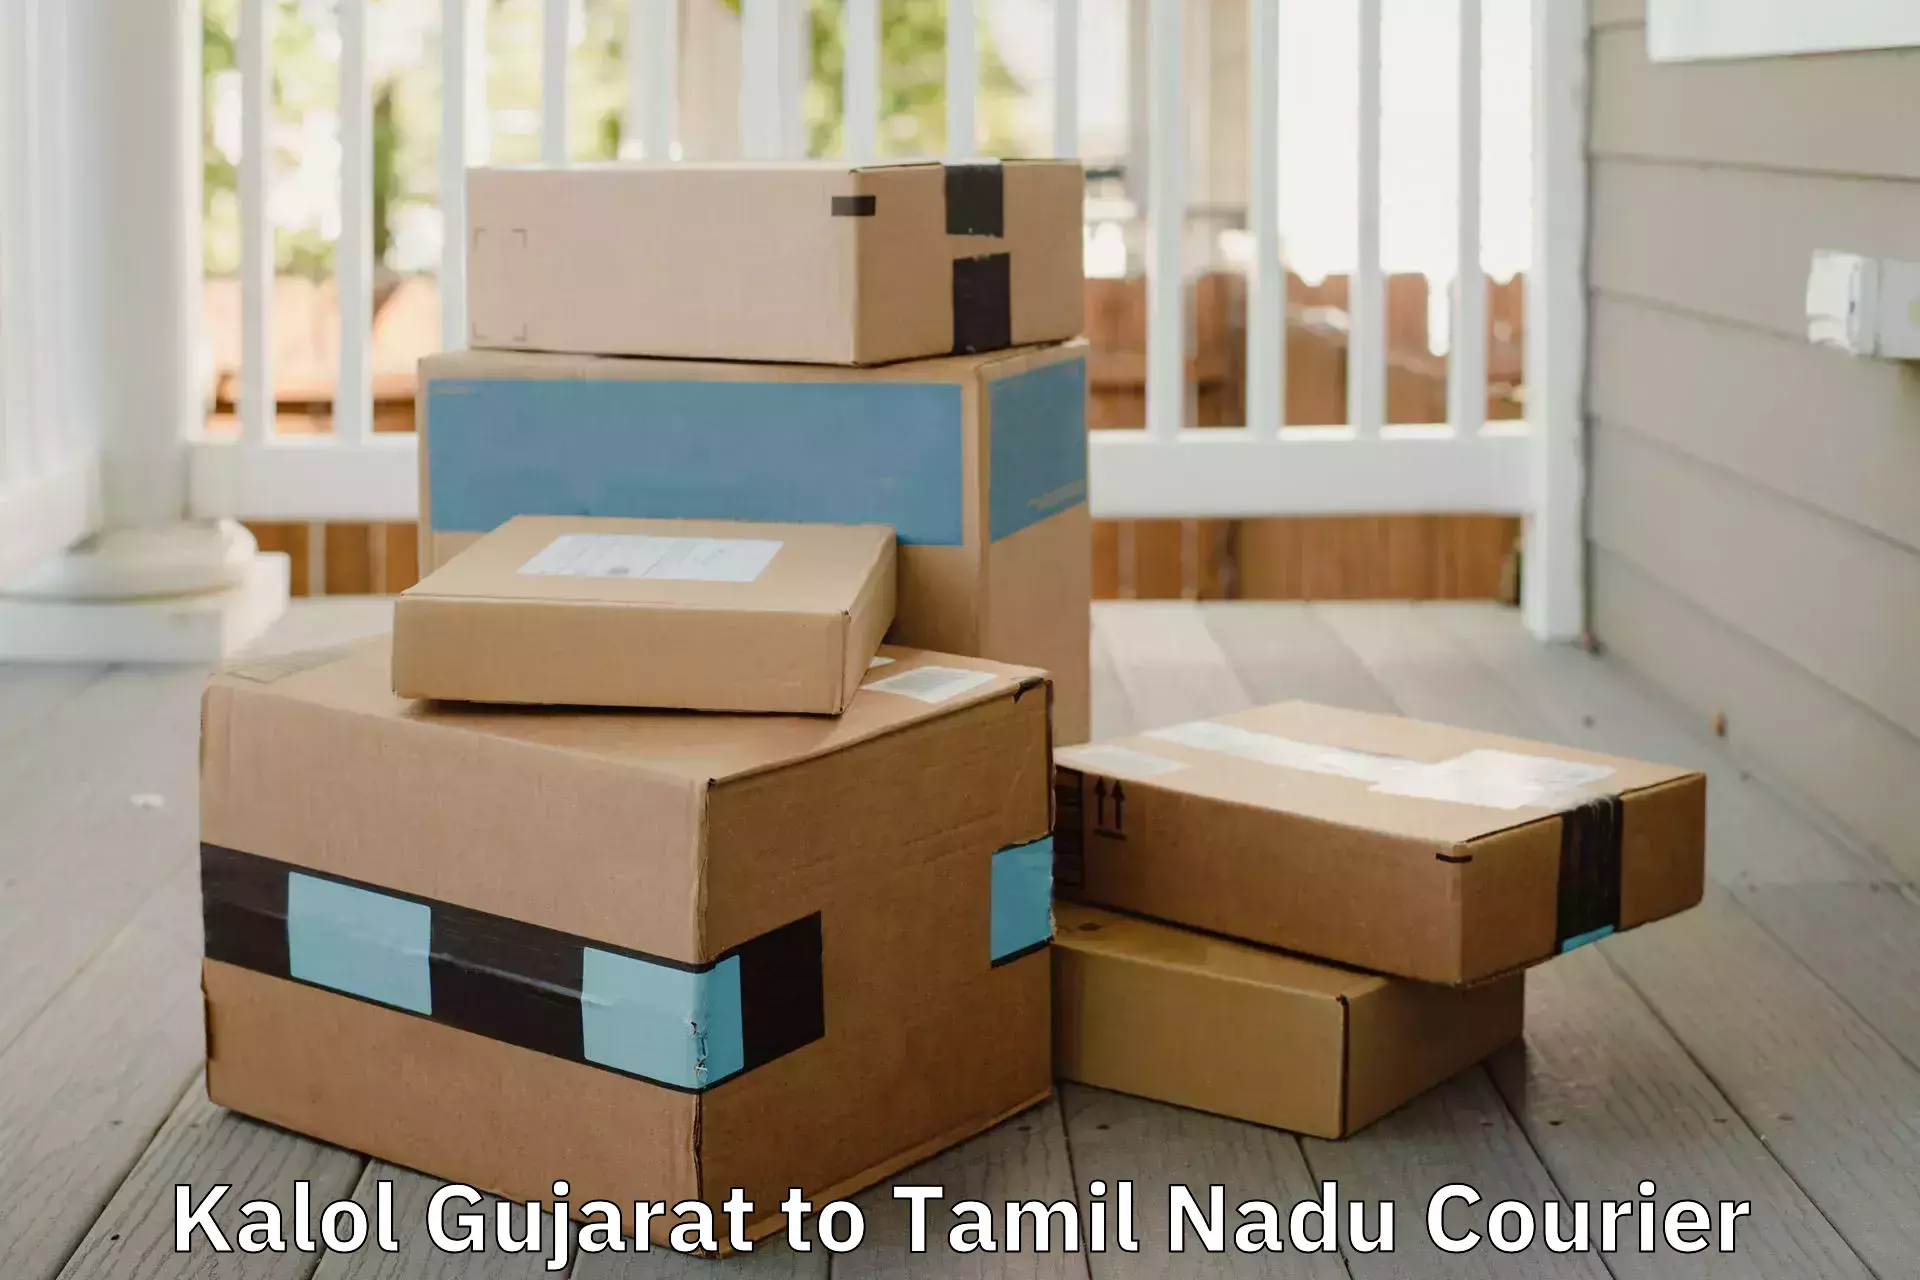 Efficient moving company Kalol Gujarat to Chennai Port